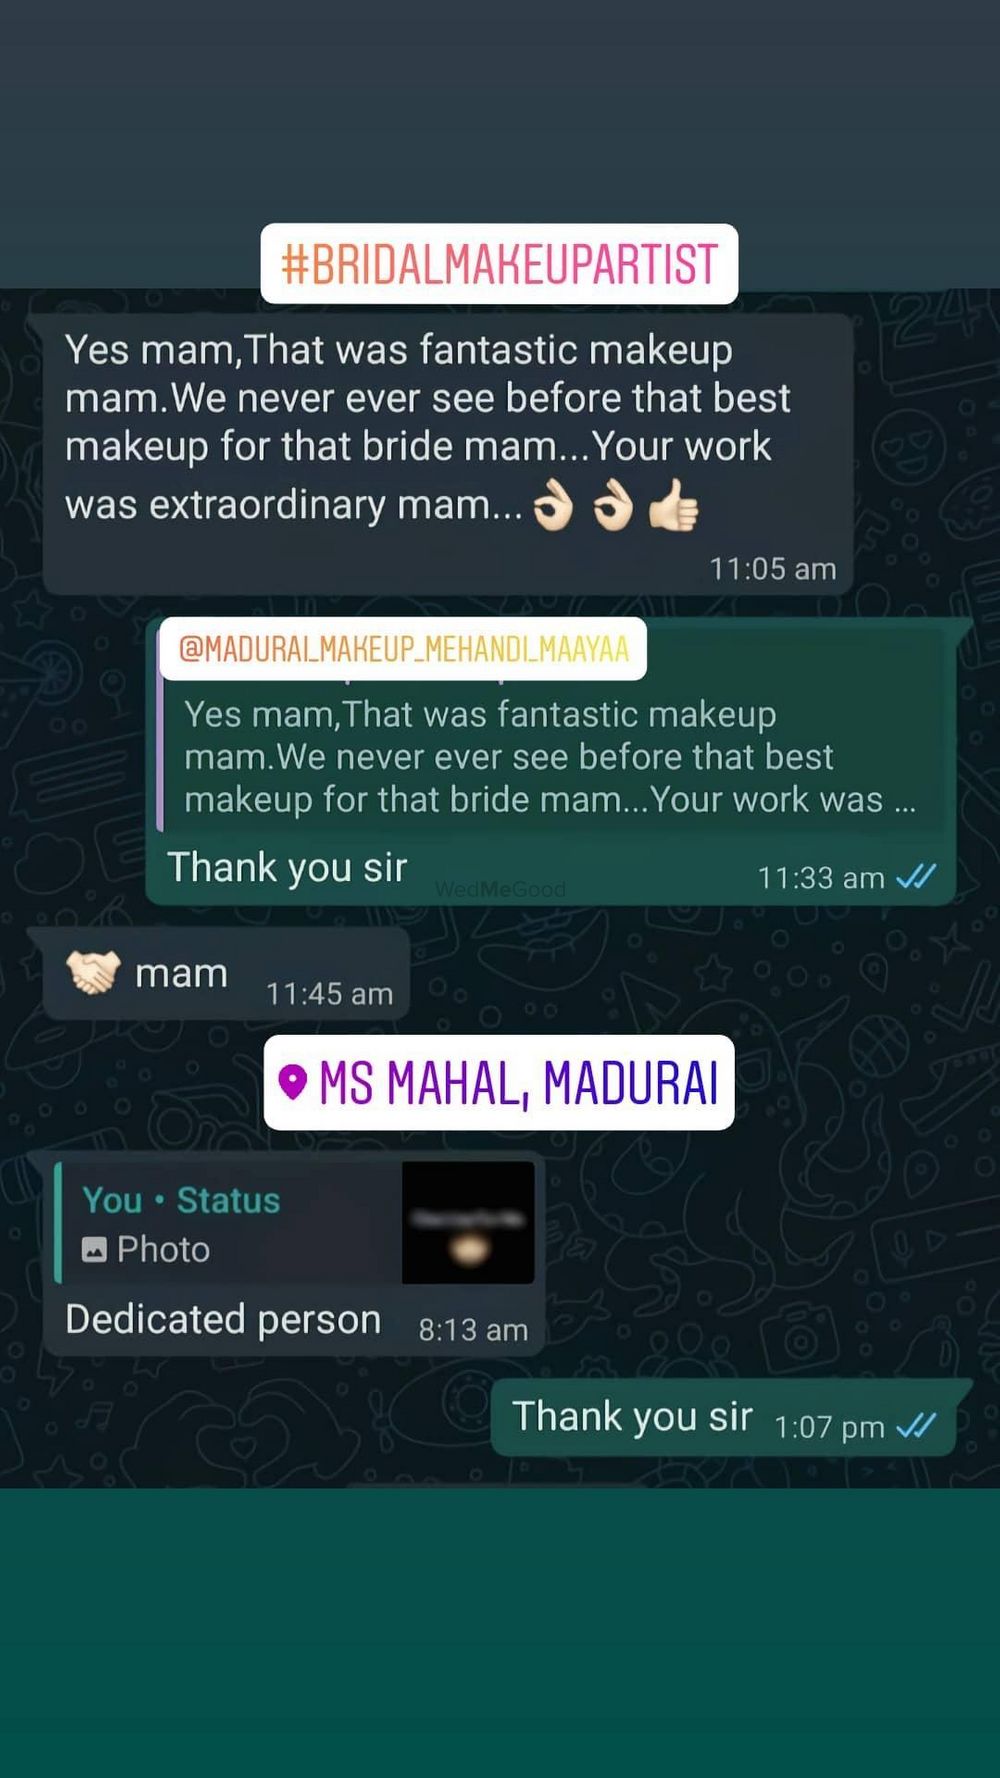 Photo From client reviews - By Madurai Makeup Maayaa